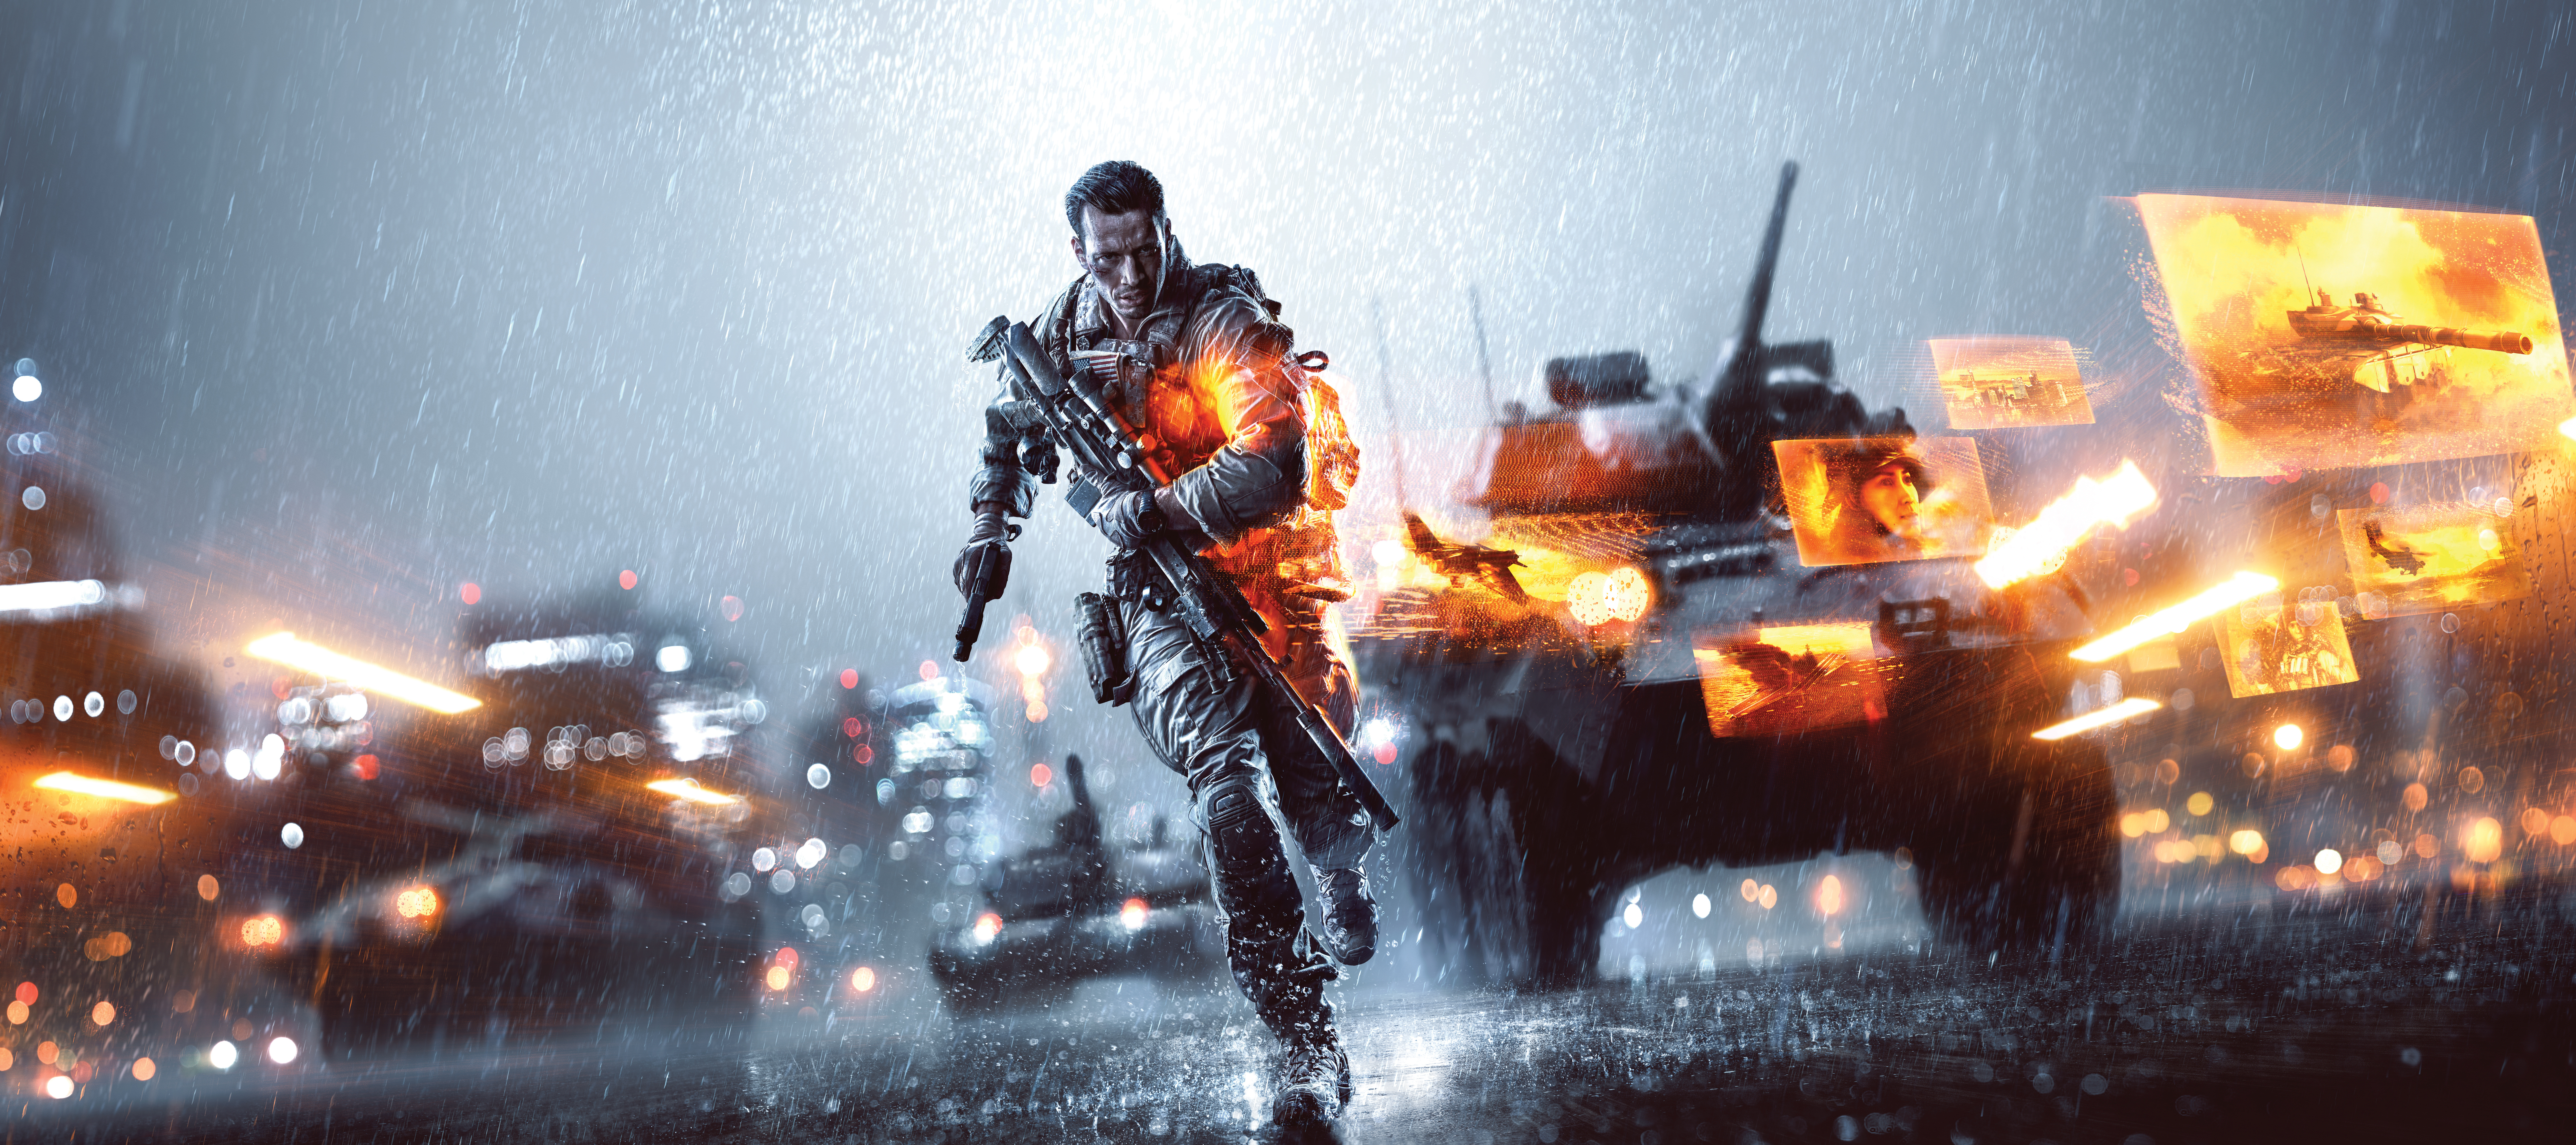 Battlefield 4 Video Games Video Game Art Soldier Gun Tank Vehicle Rain Military Vehicle Running Look 9000x4000